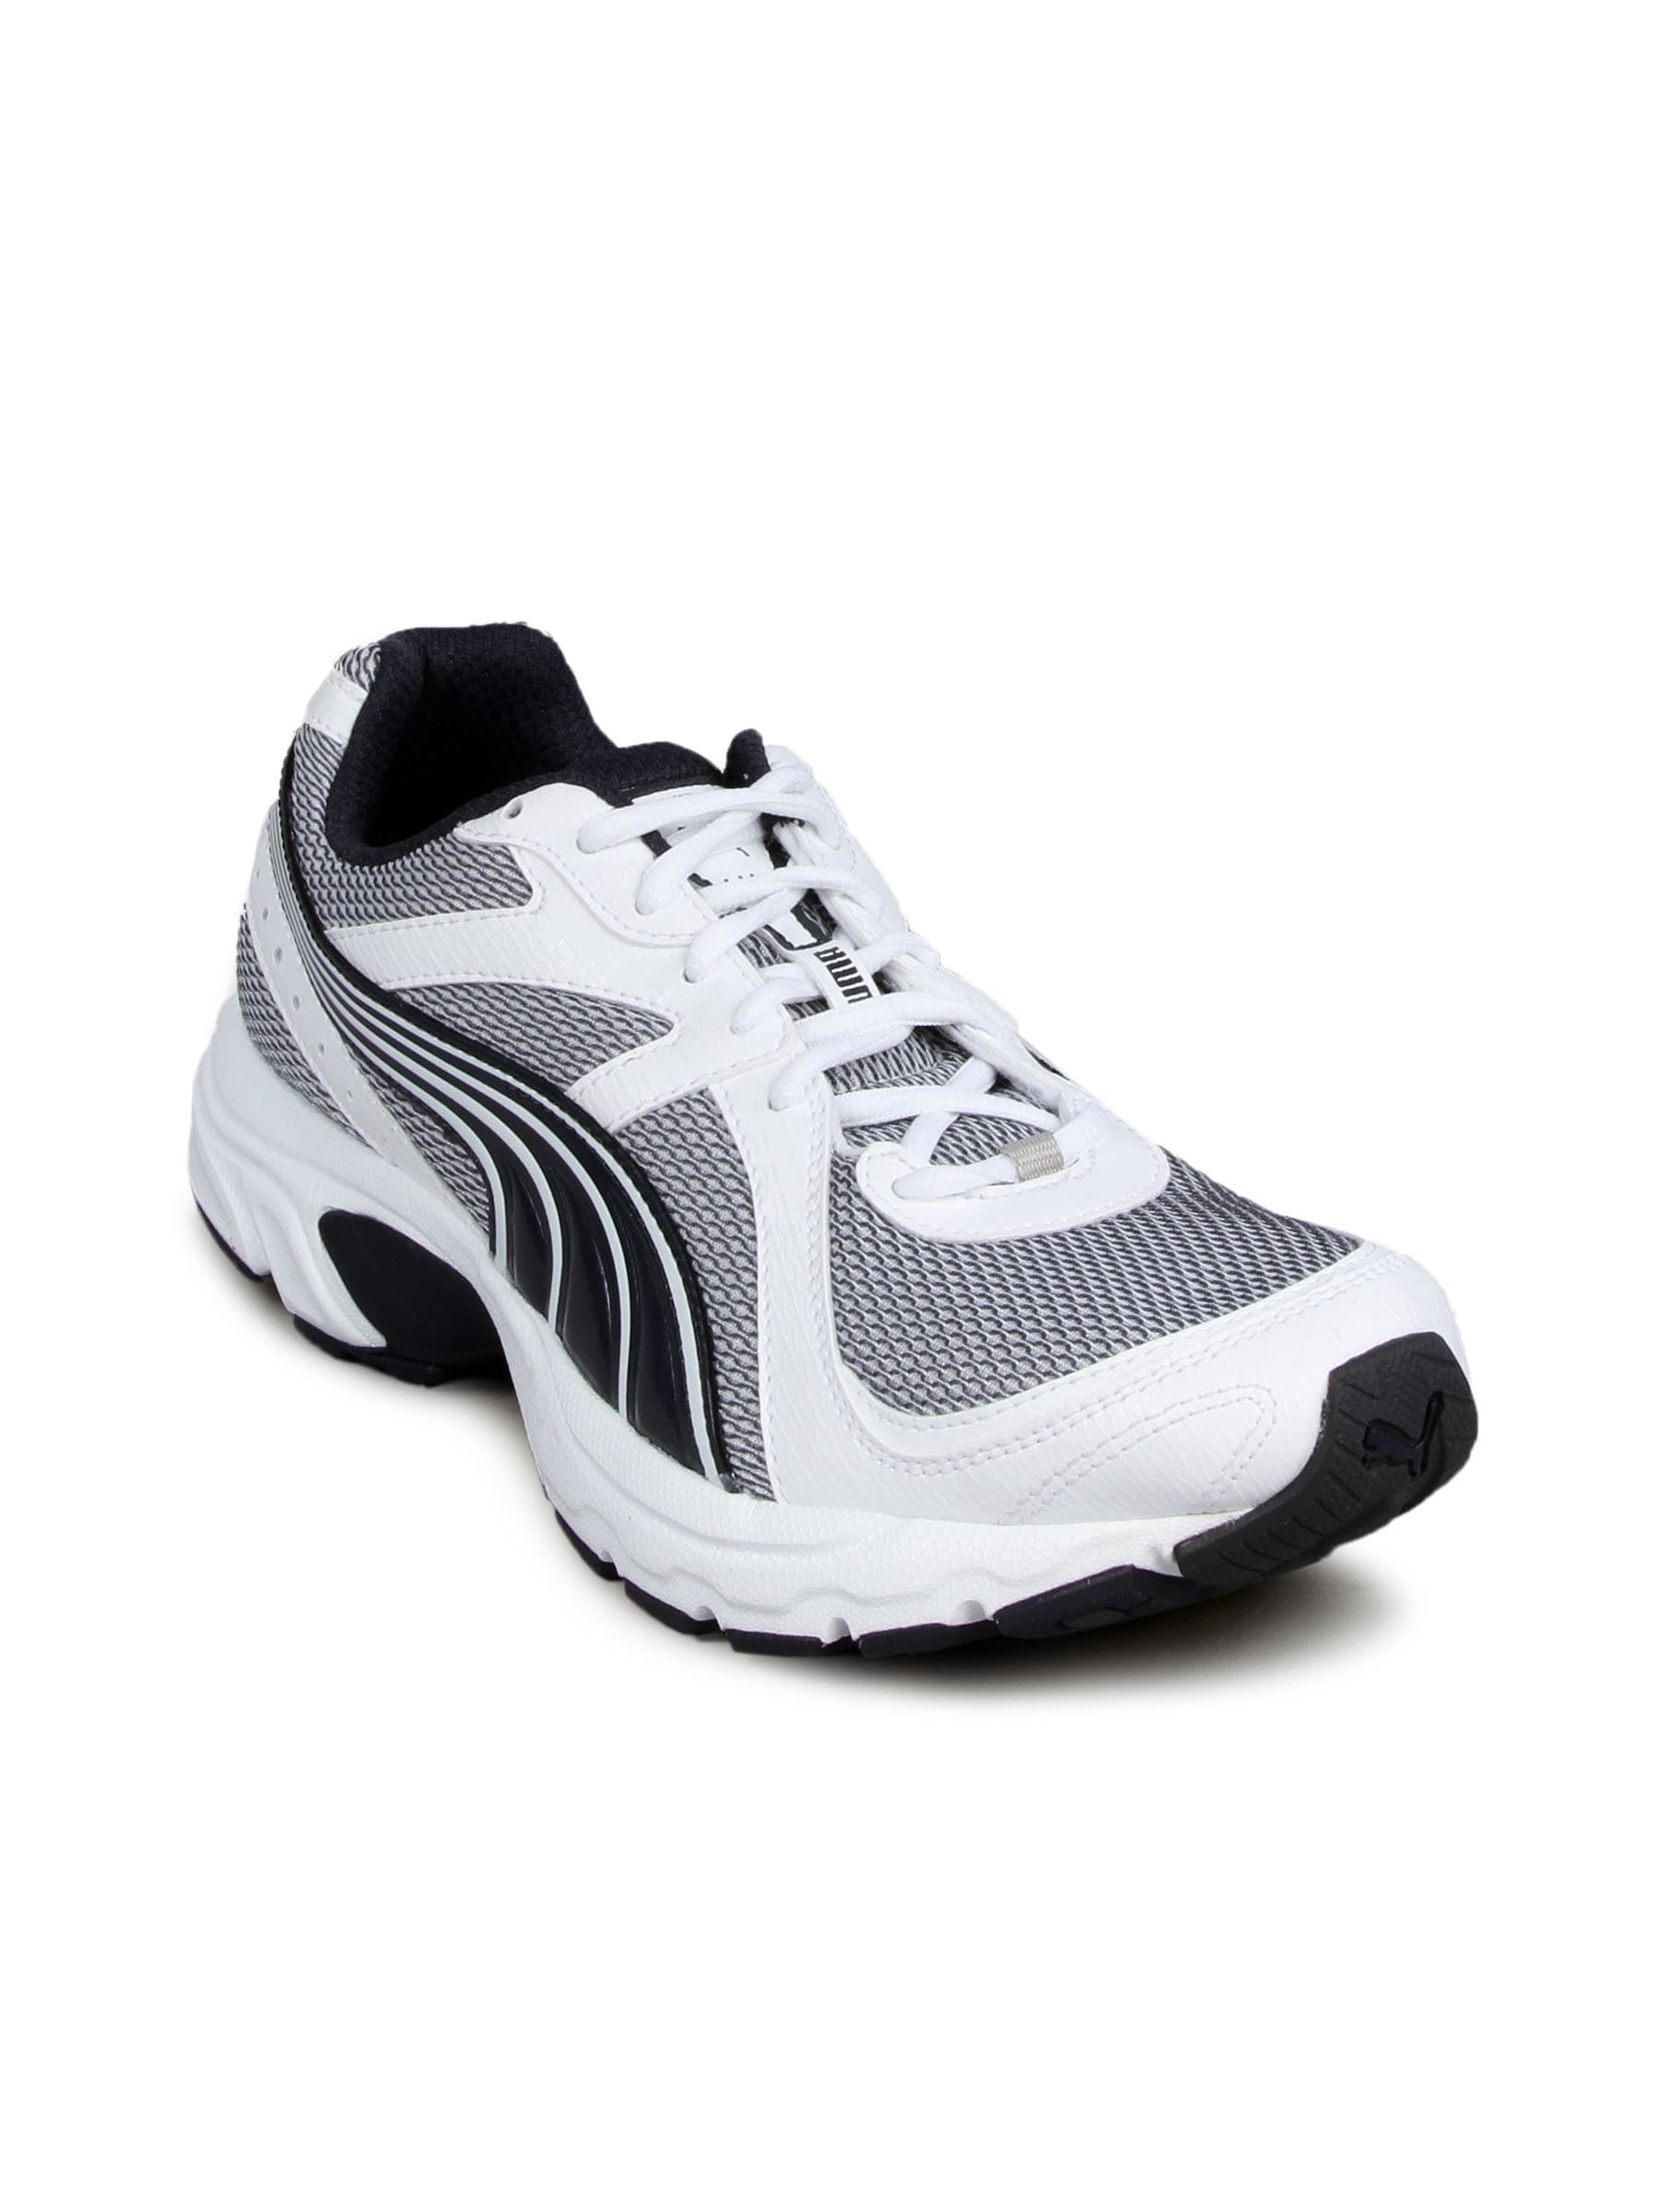 Puma Men's Kuris White Grey Shoe